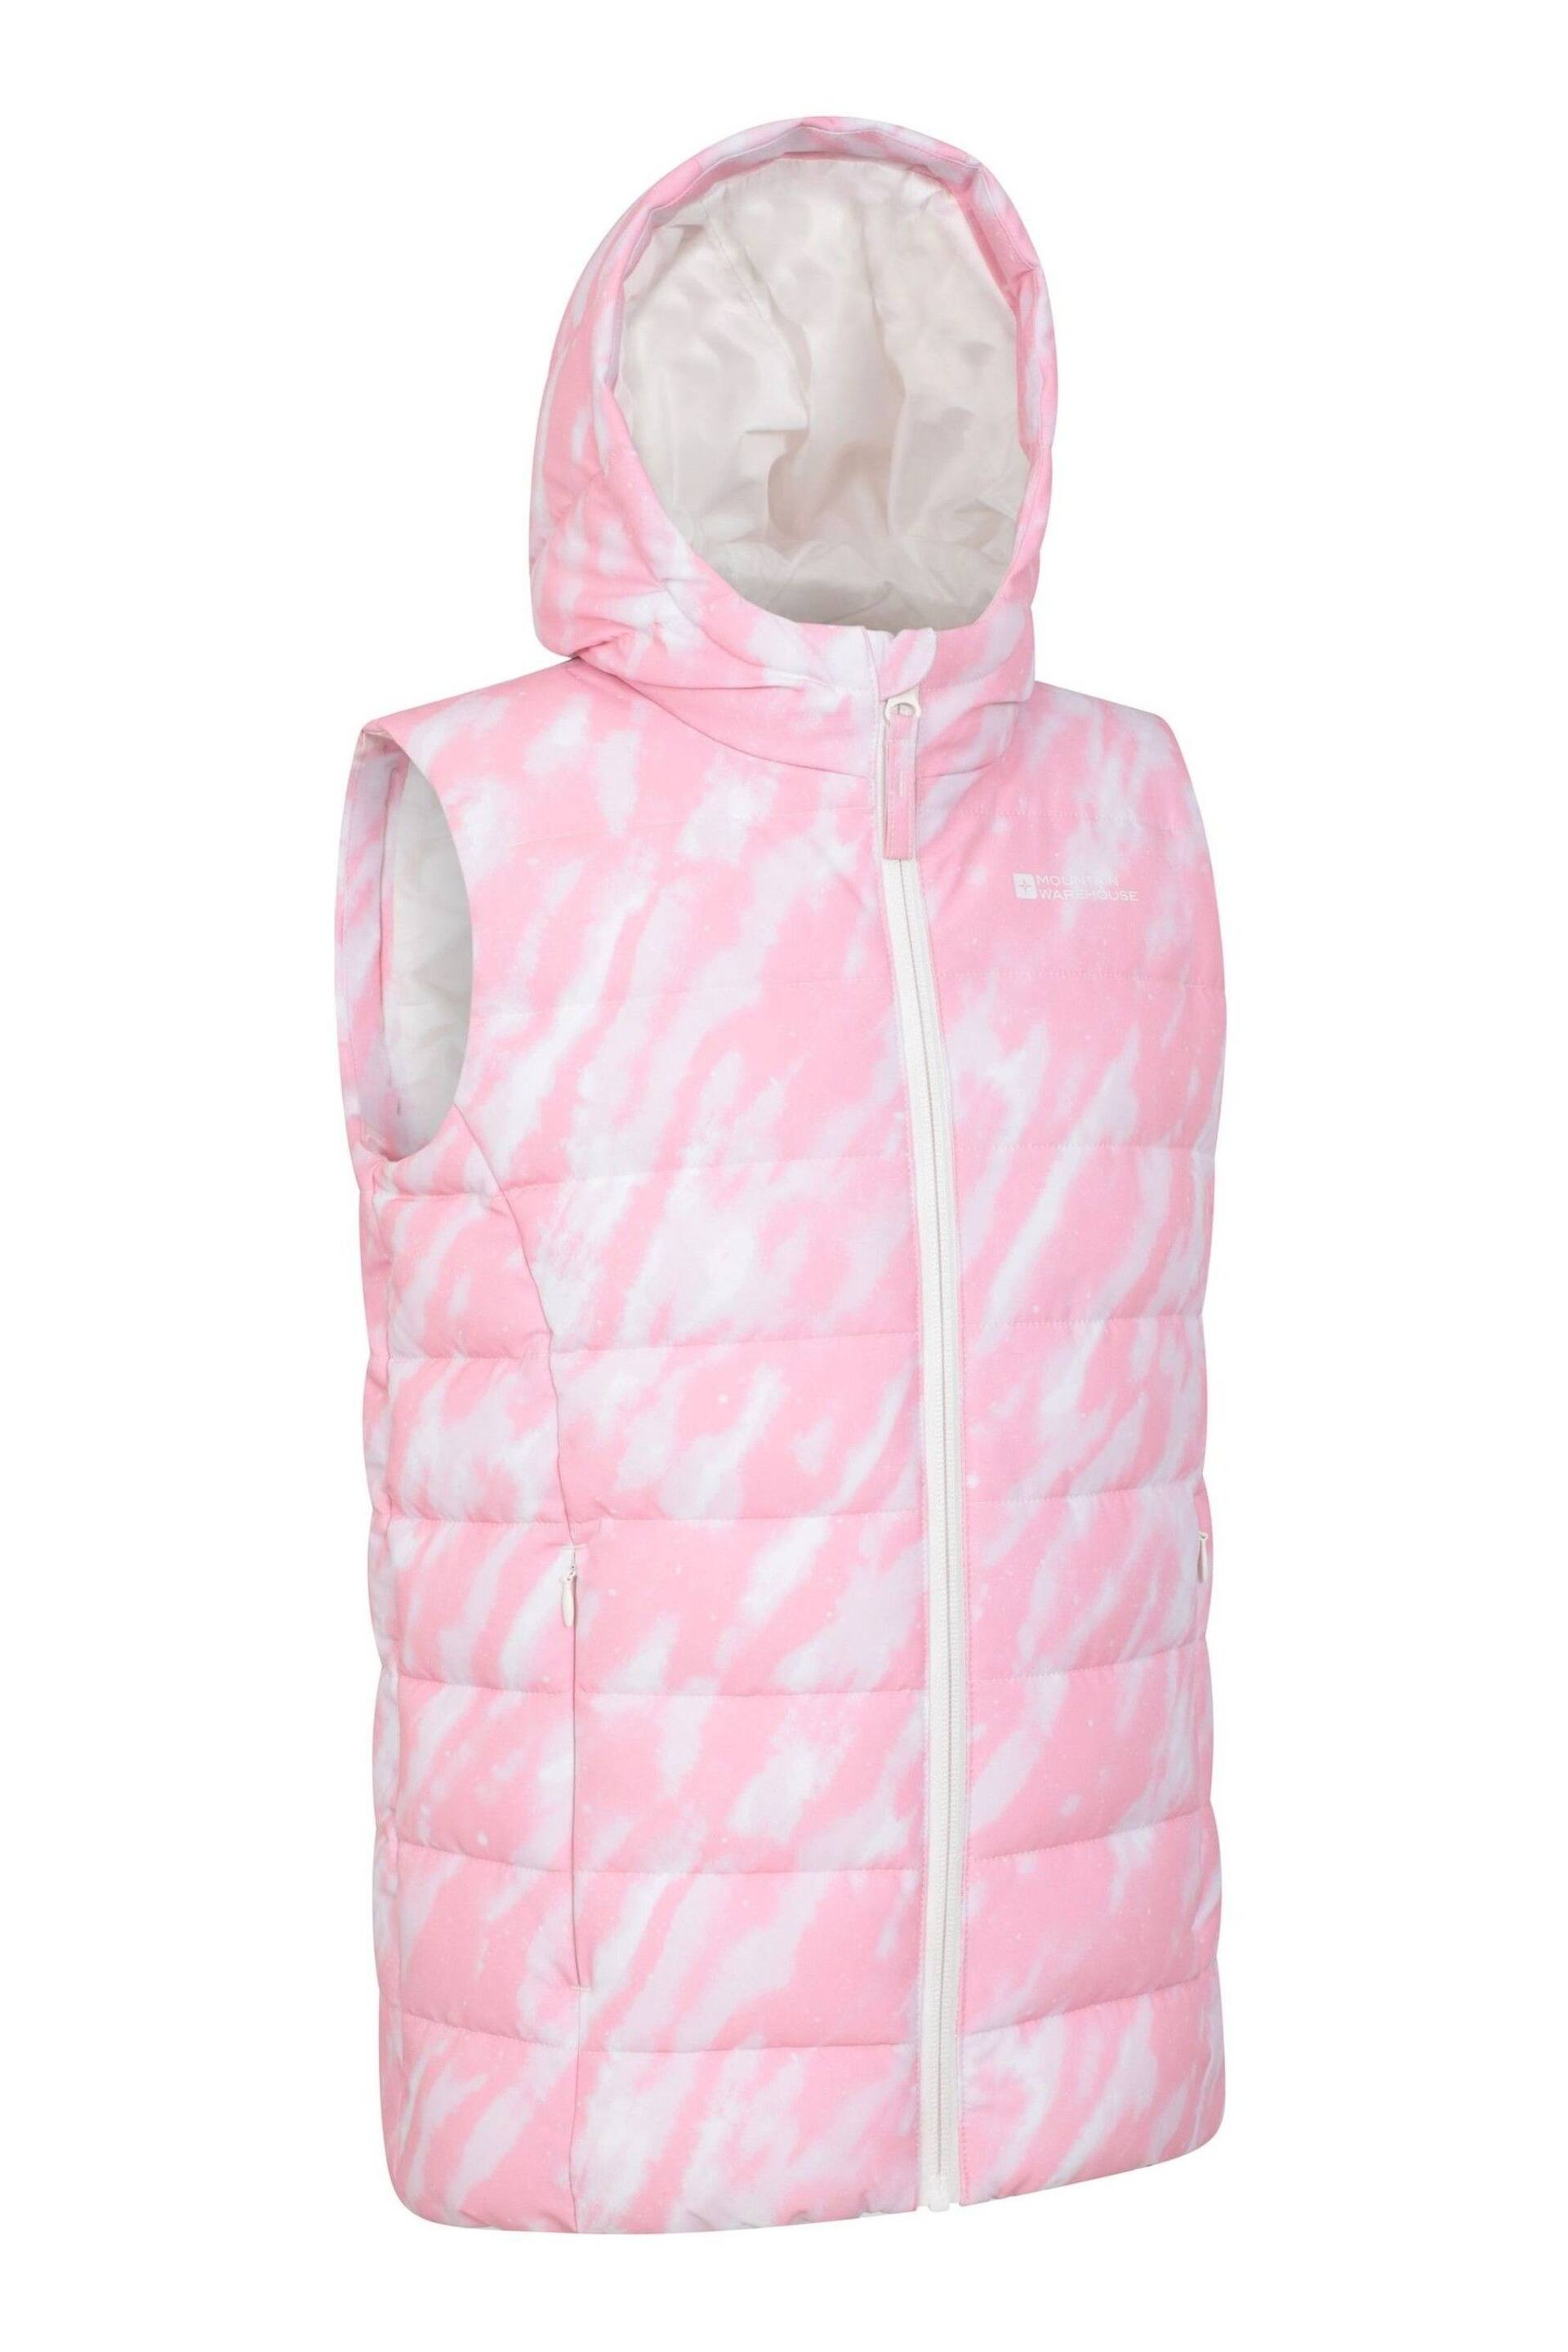 Mountain Warehouse Pink Kids Jewel Water Resistant Hooded Gilet - Image 3 of 5